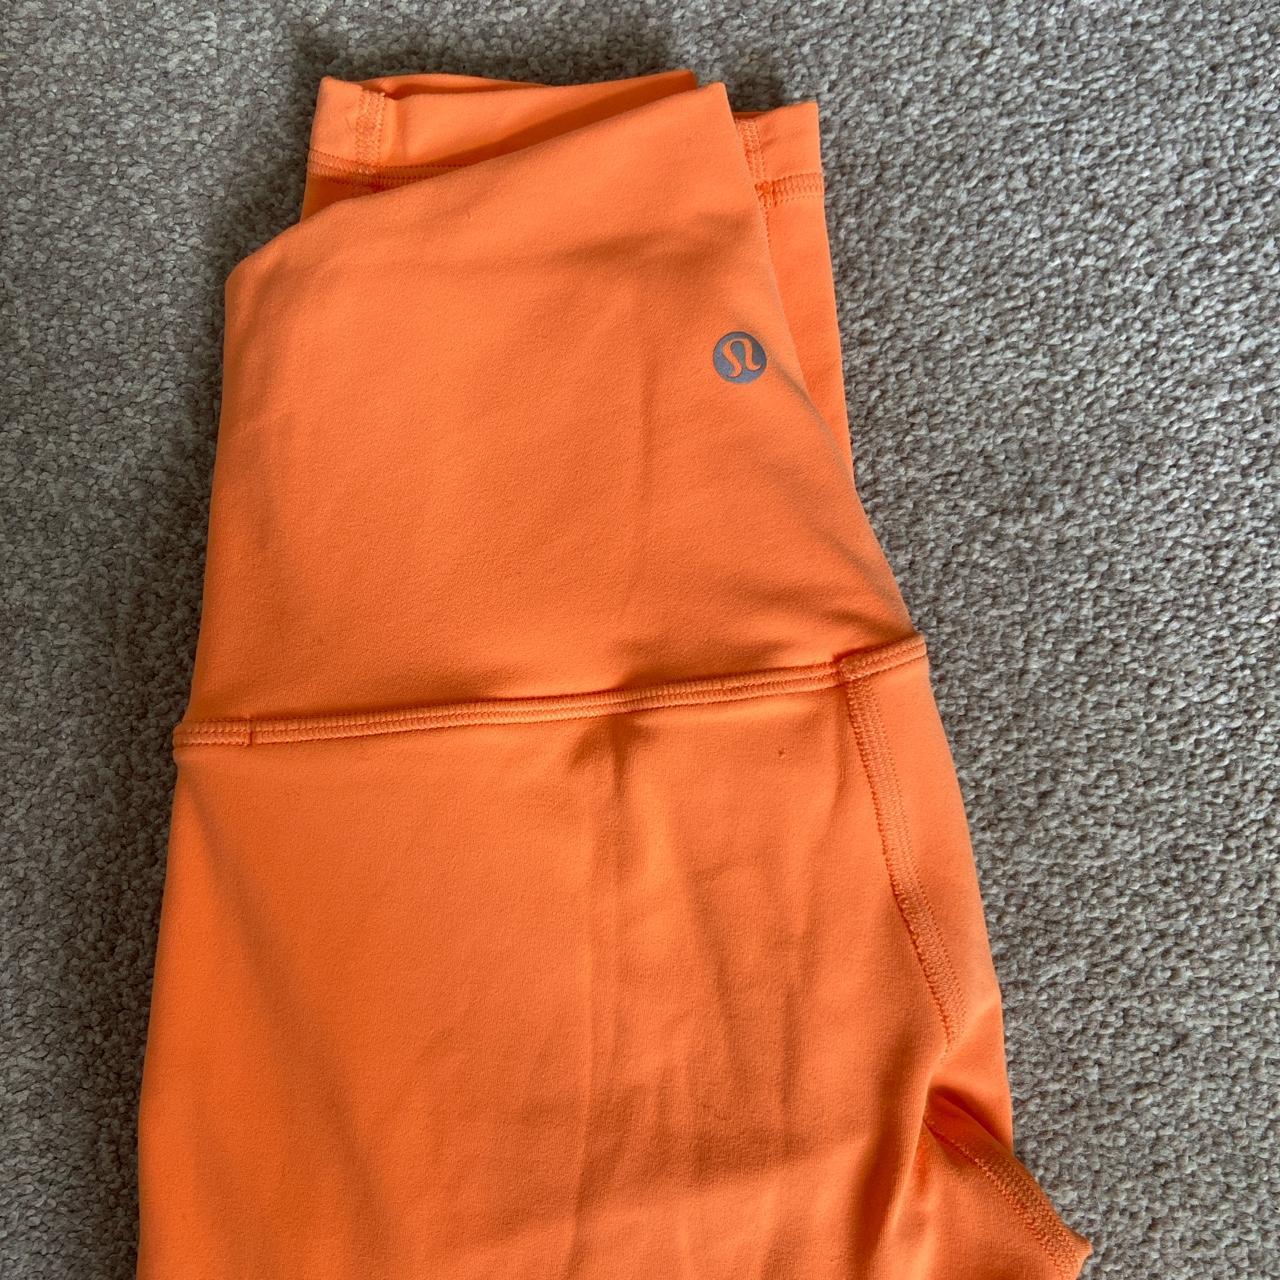 Lululemon Orange Soda align leggings Size 4 uk 8... - Depop